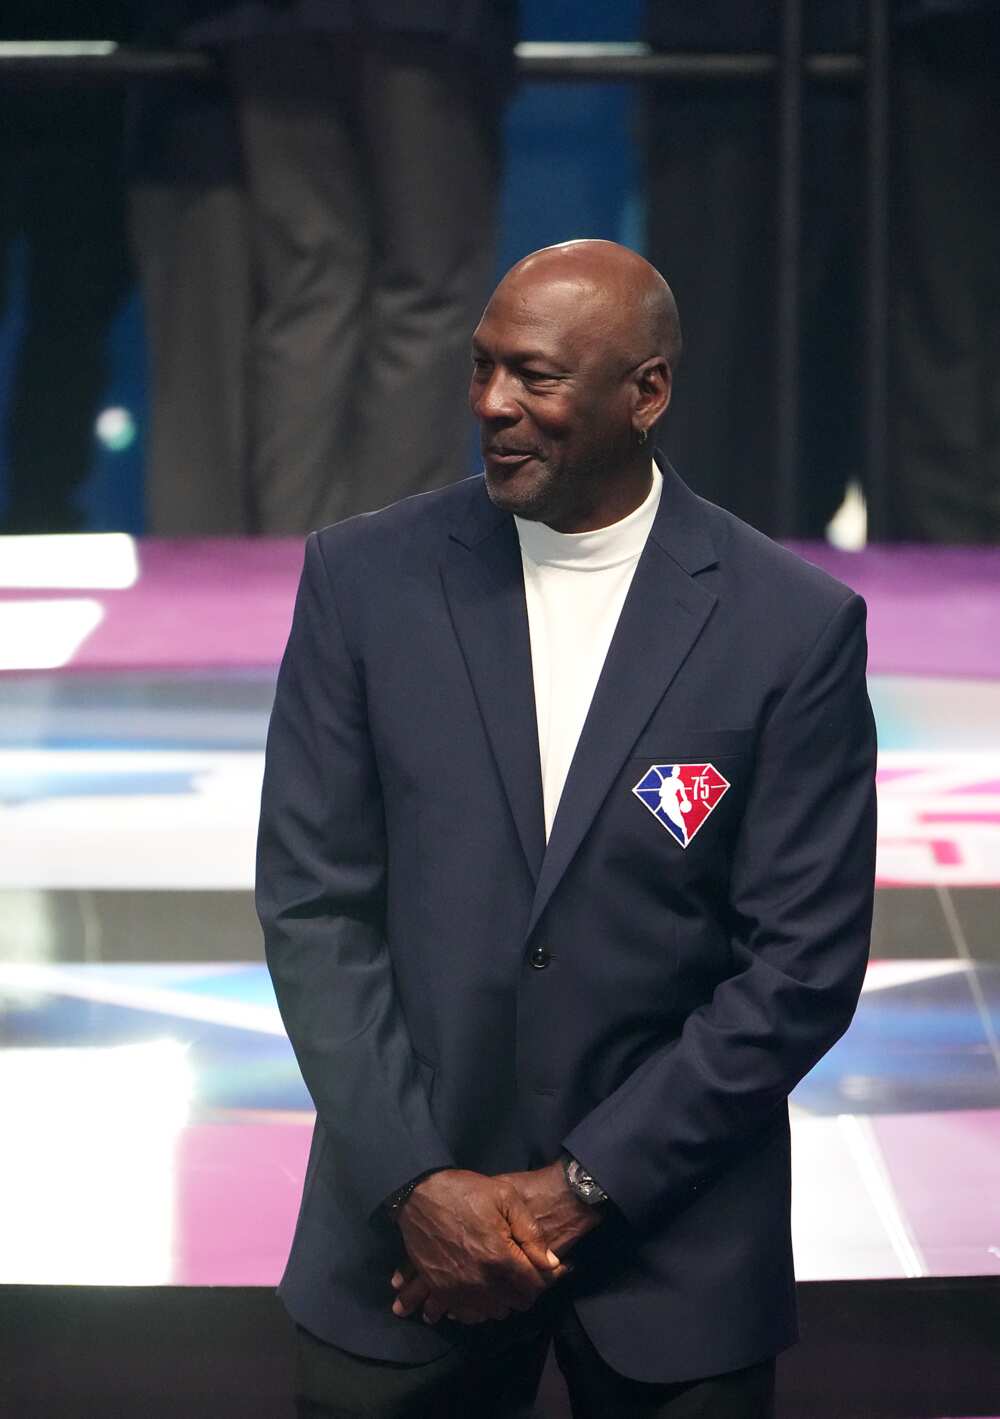 Michael Jordan Hornets sale: MJ nets reported $1.4 billion profit